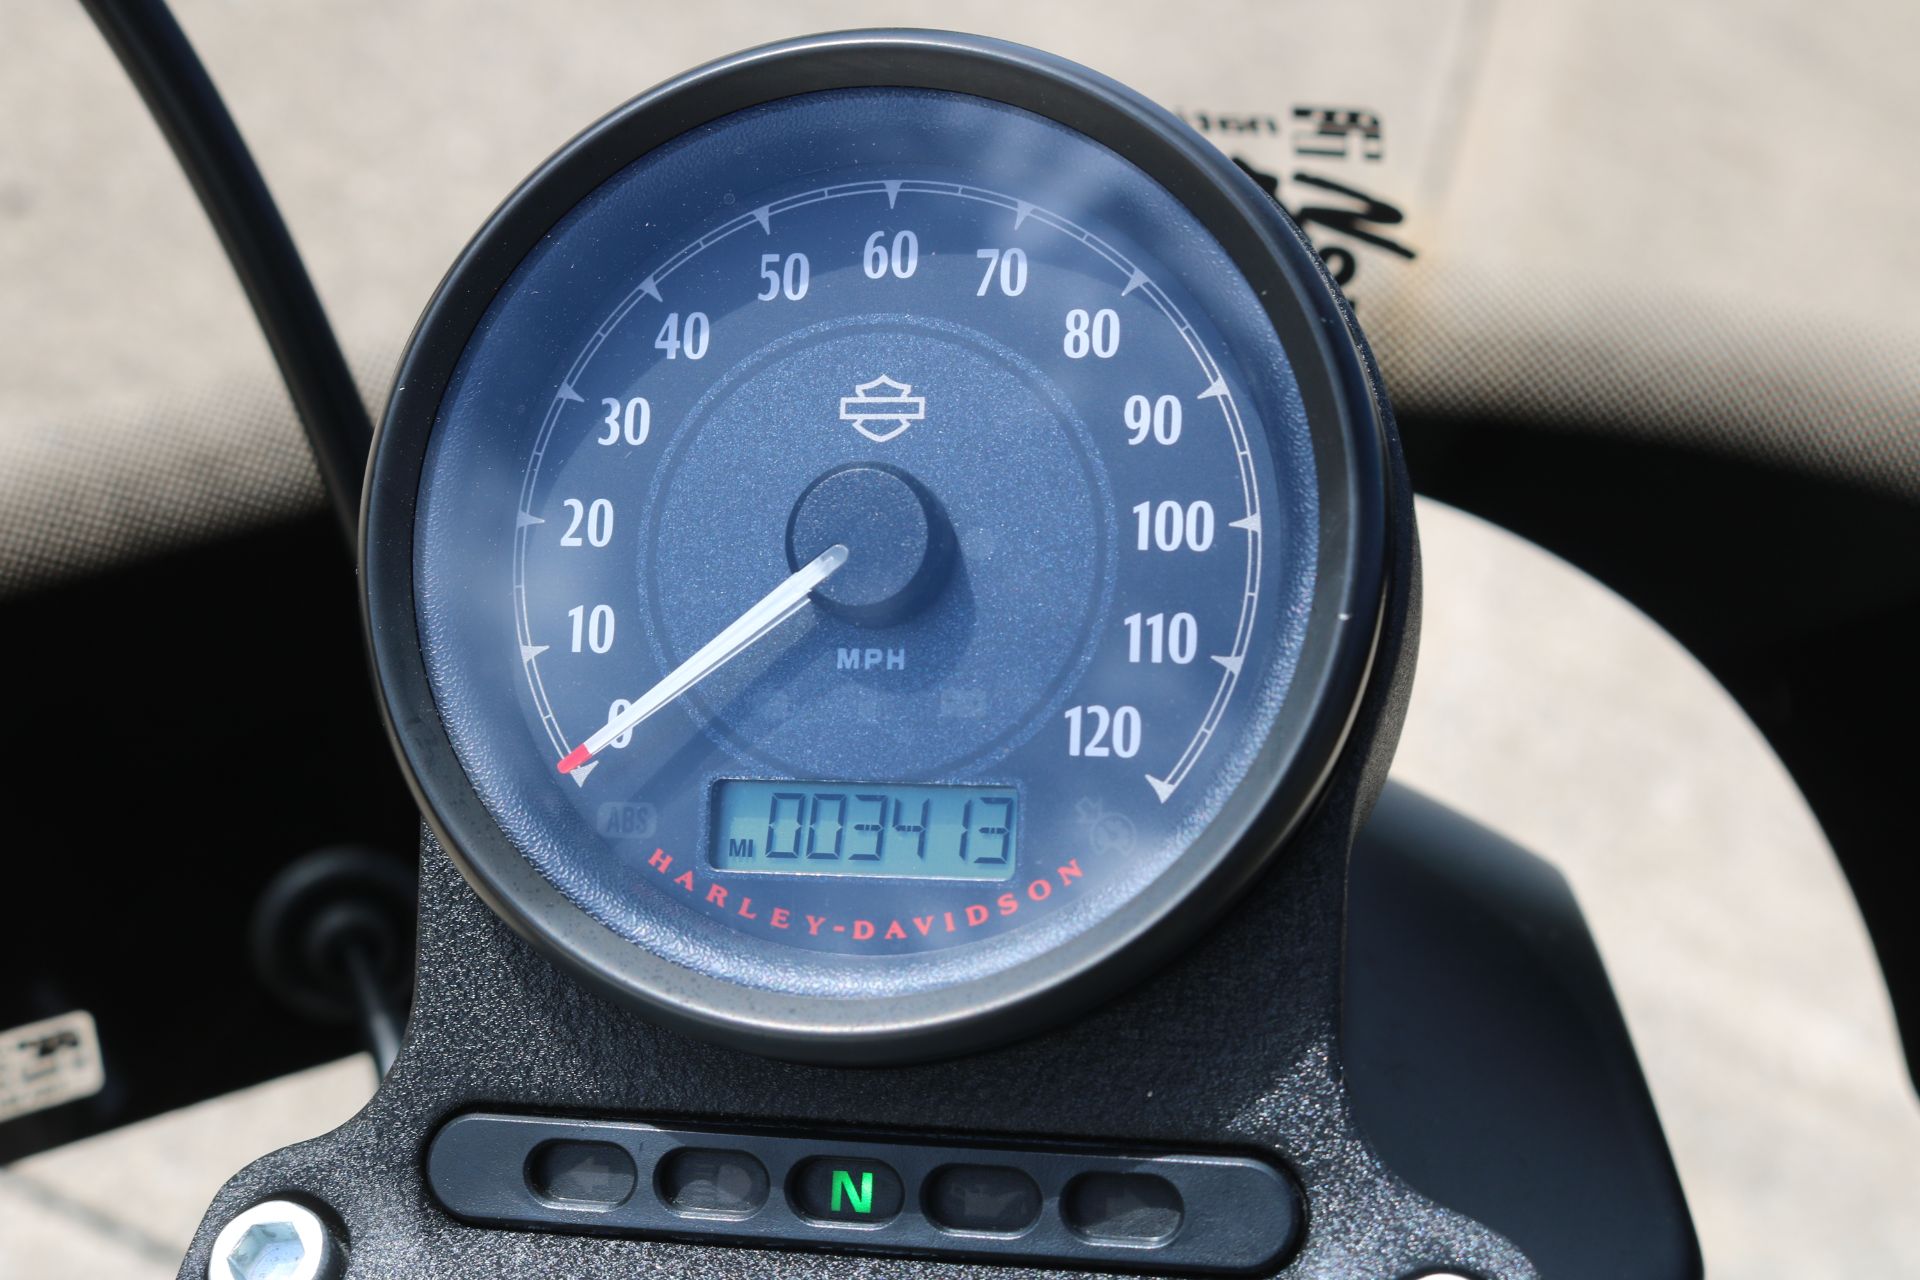 2021 Harley-Davidson Iron 1200™ in Ames, Iowa - Photo 15